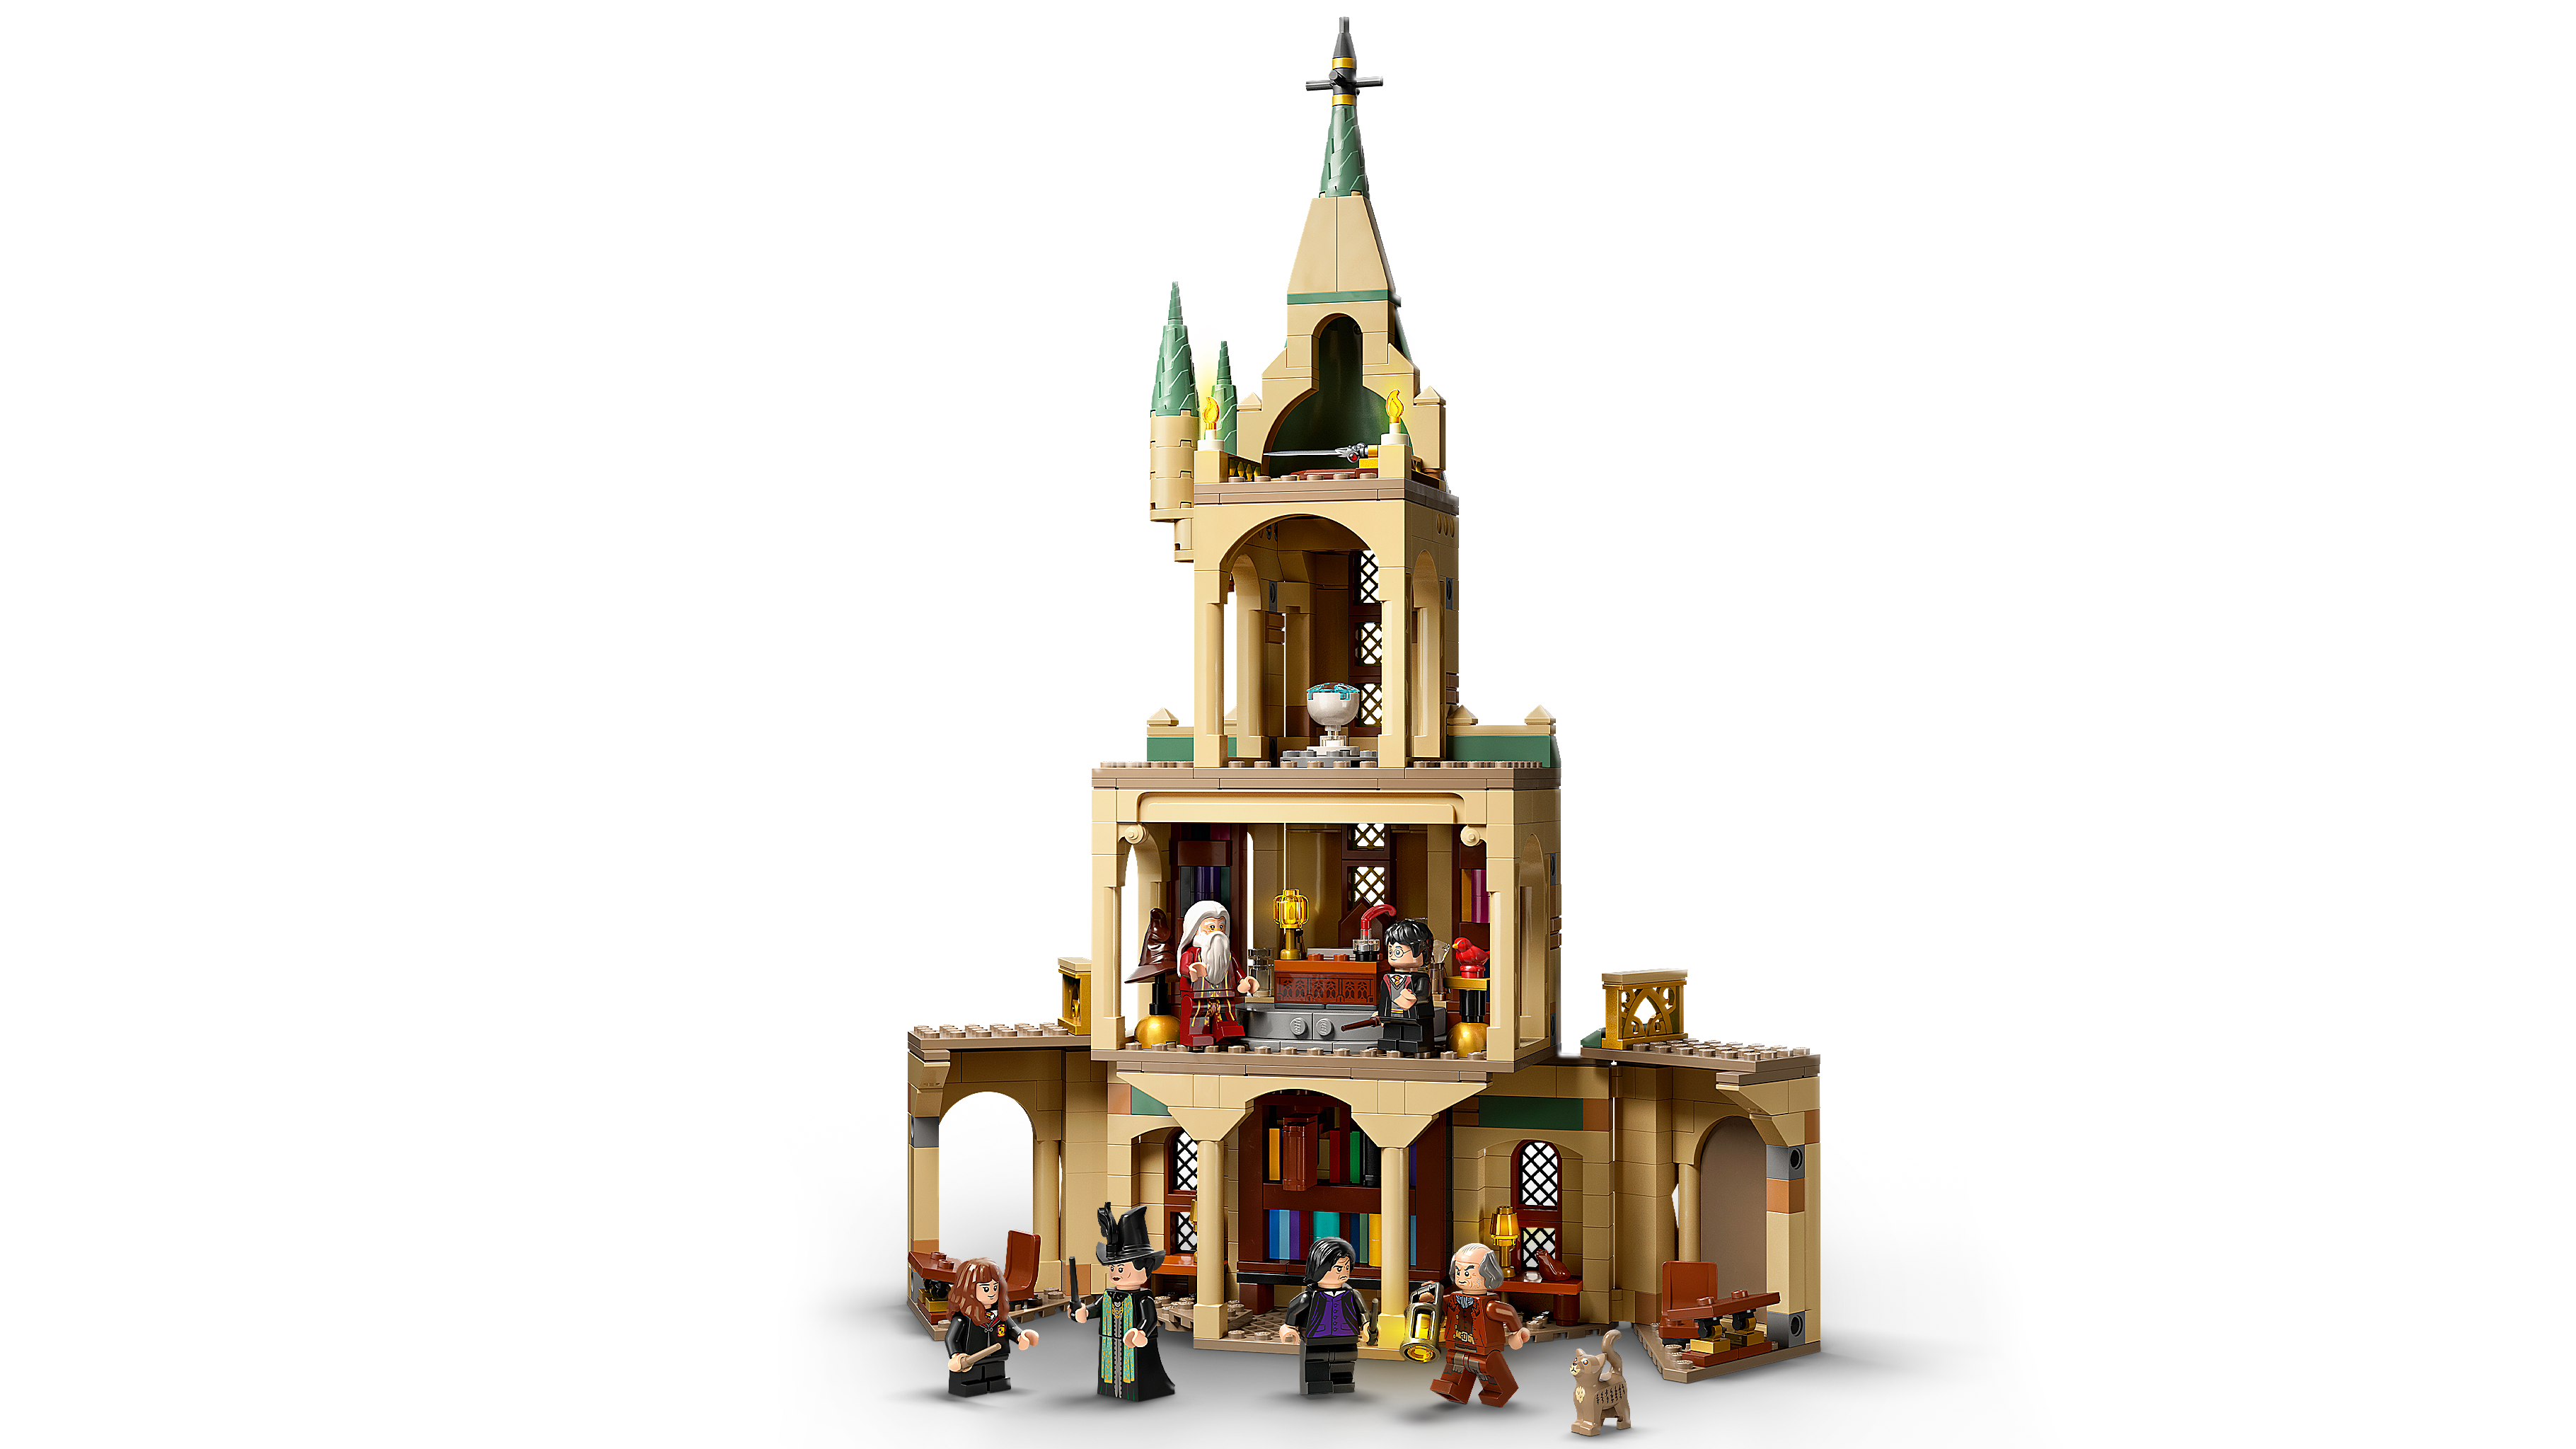 LEGO - Harry Potter - O Beco Diagonal Gemialidades Weasley - 76422